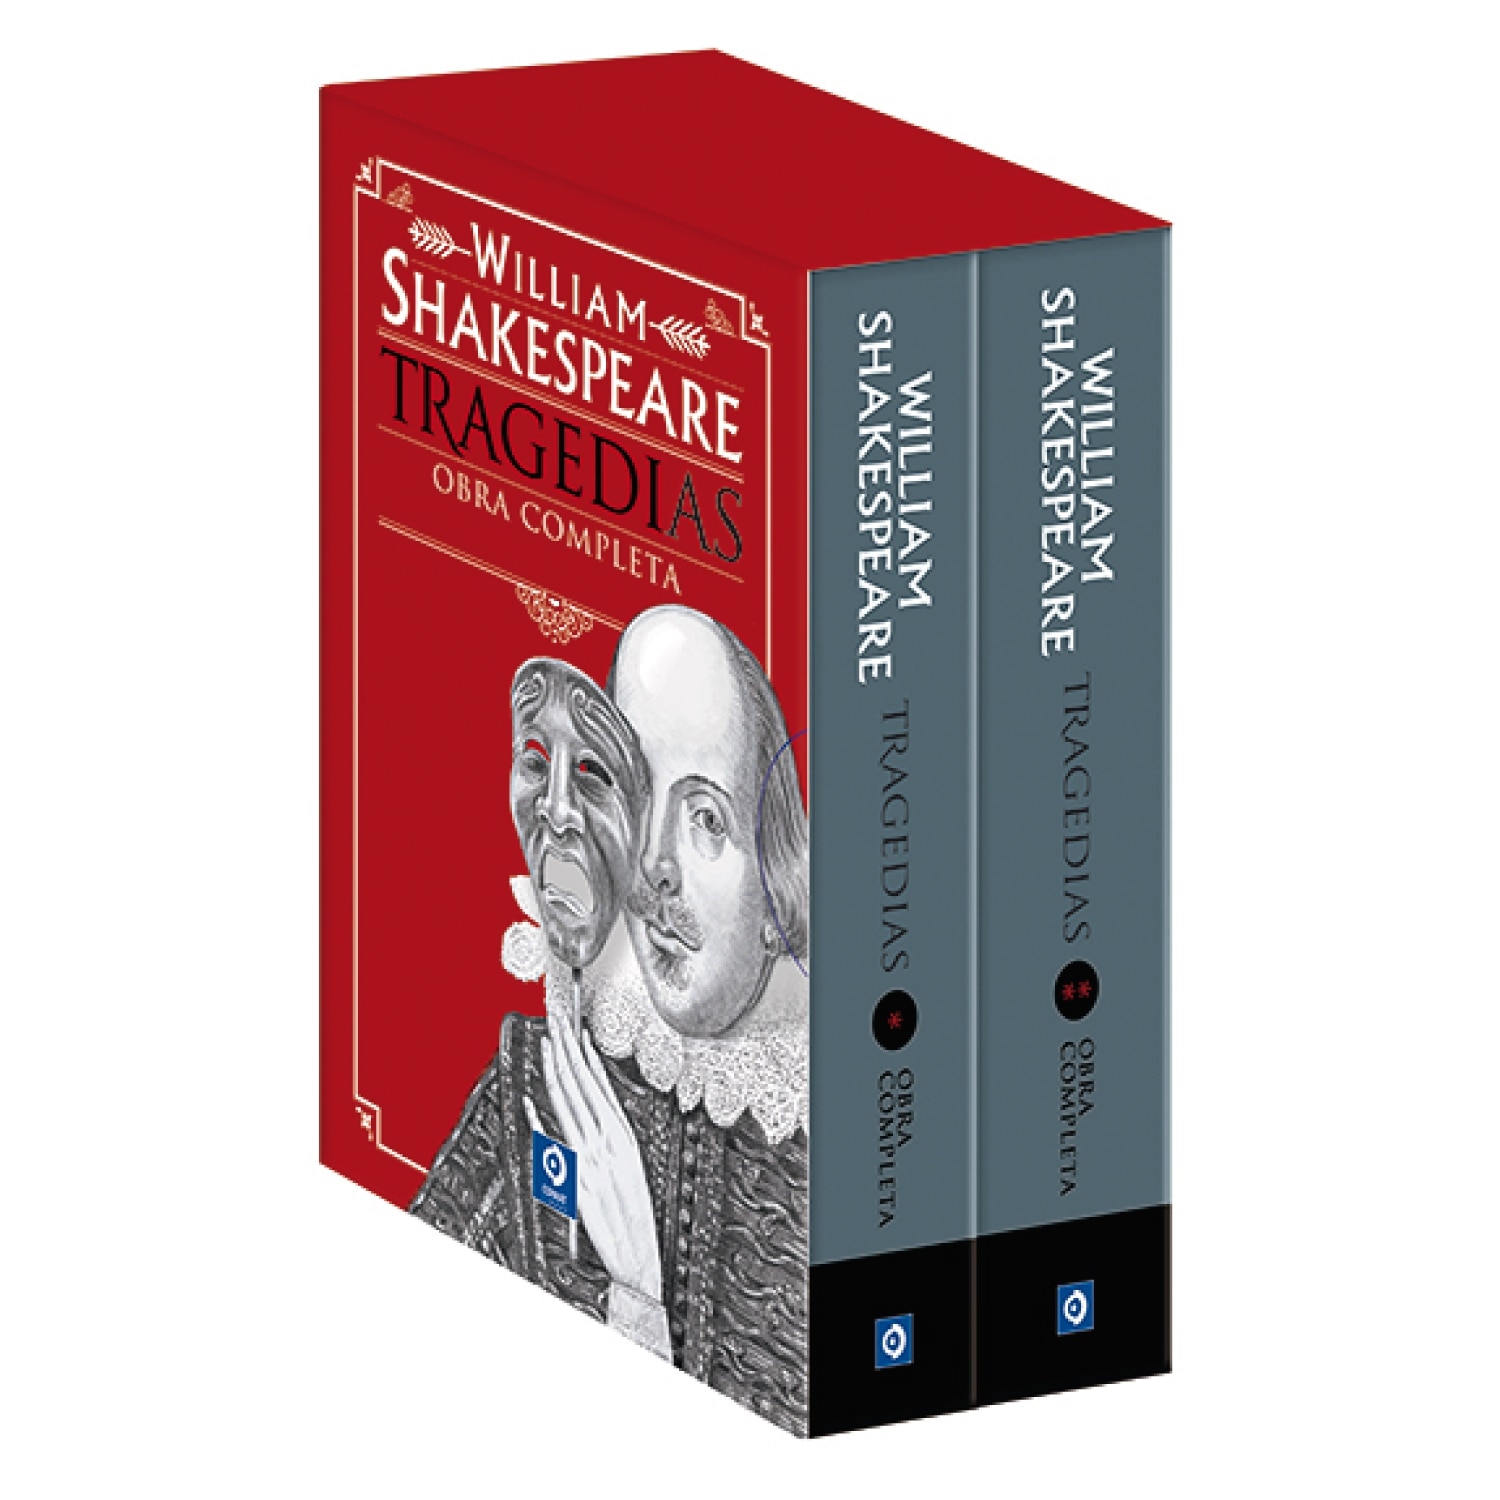 ayer Oral problema Libro W. Shakespeare Tragedias - O. Completas 2 Volumenes